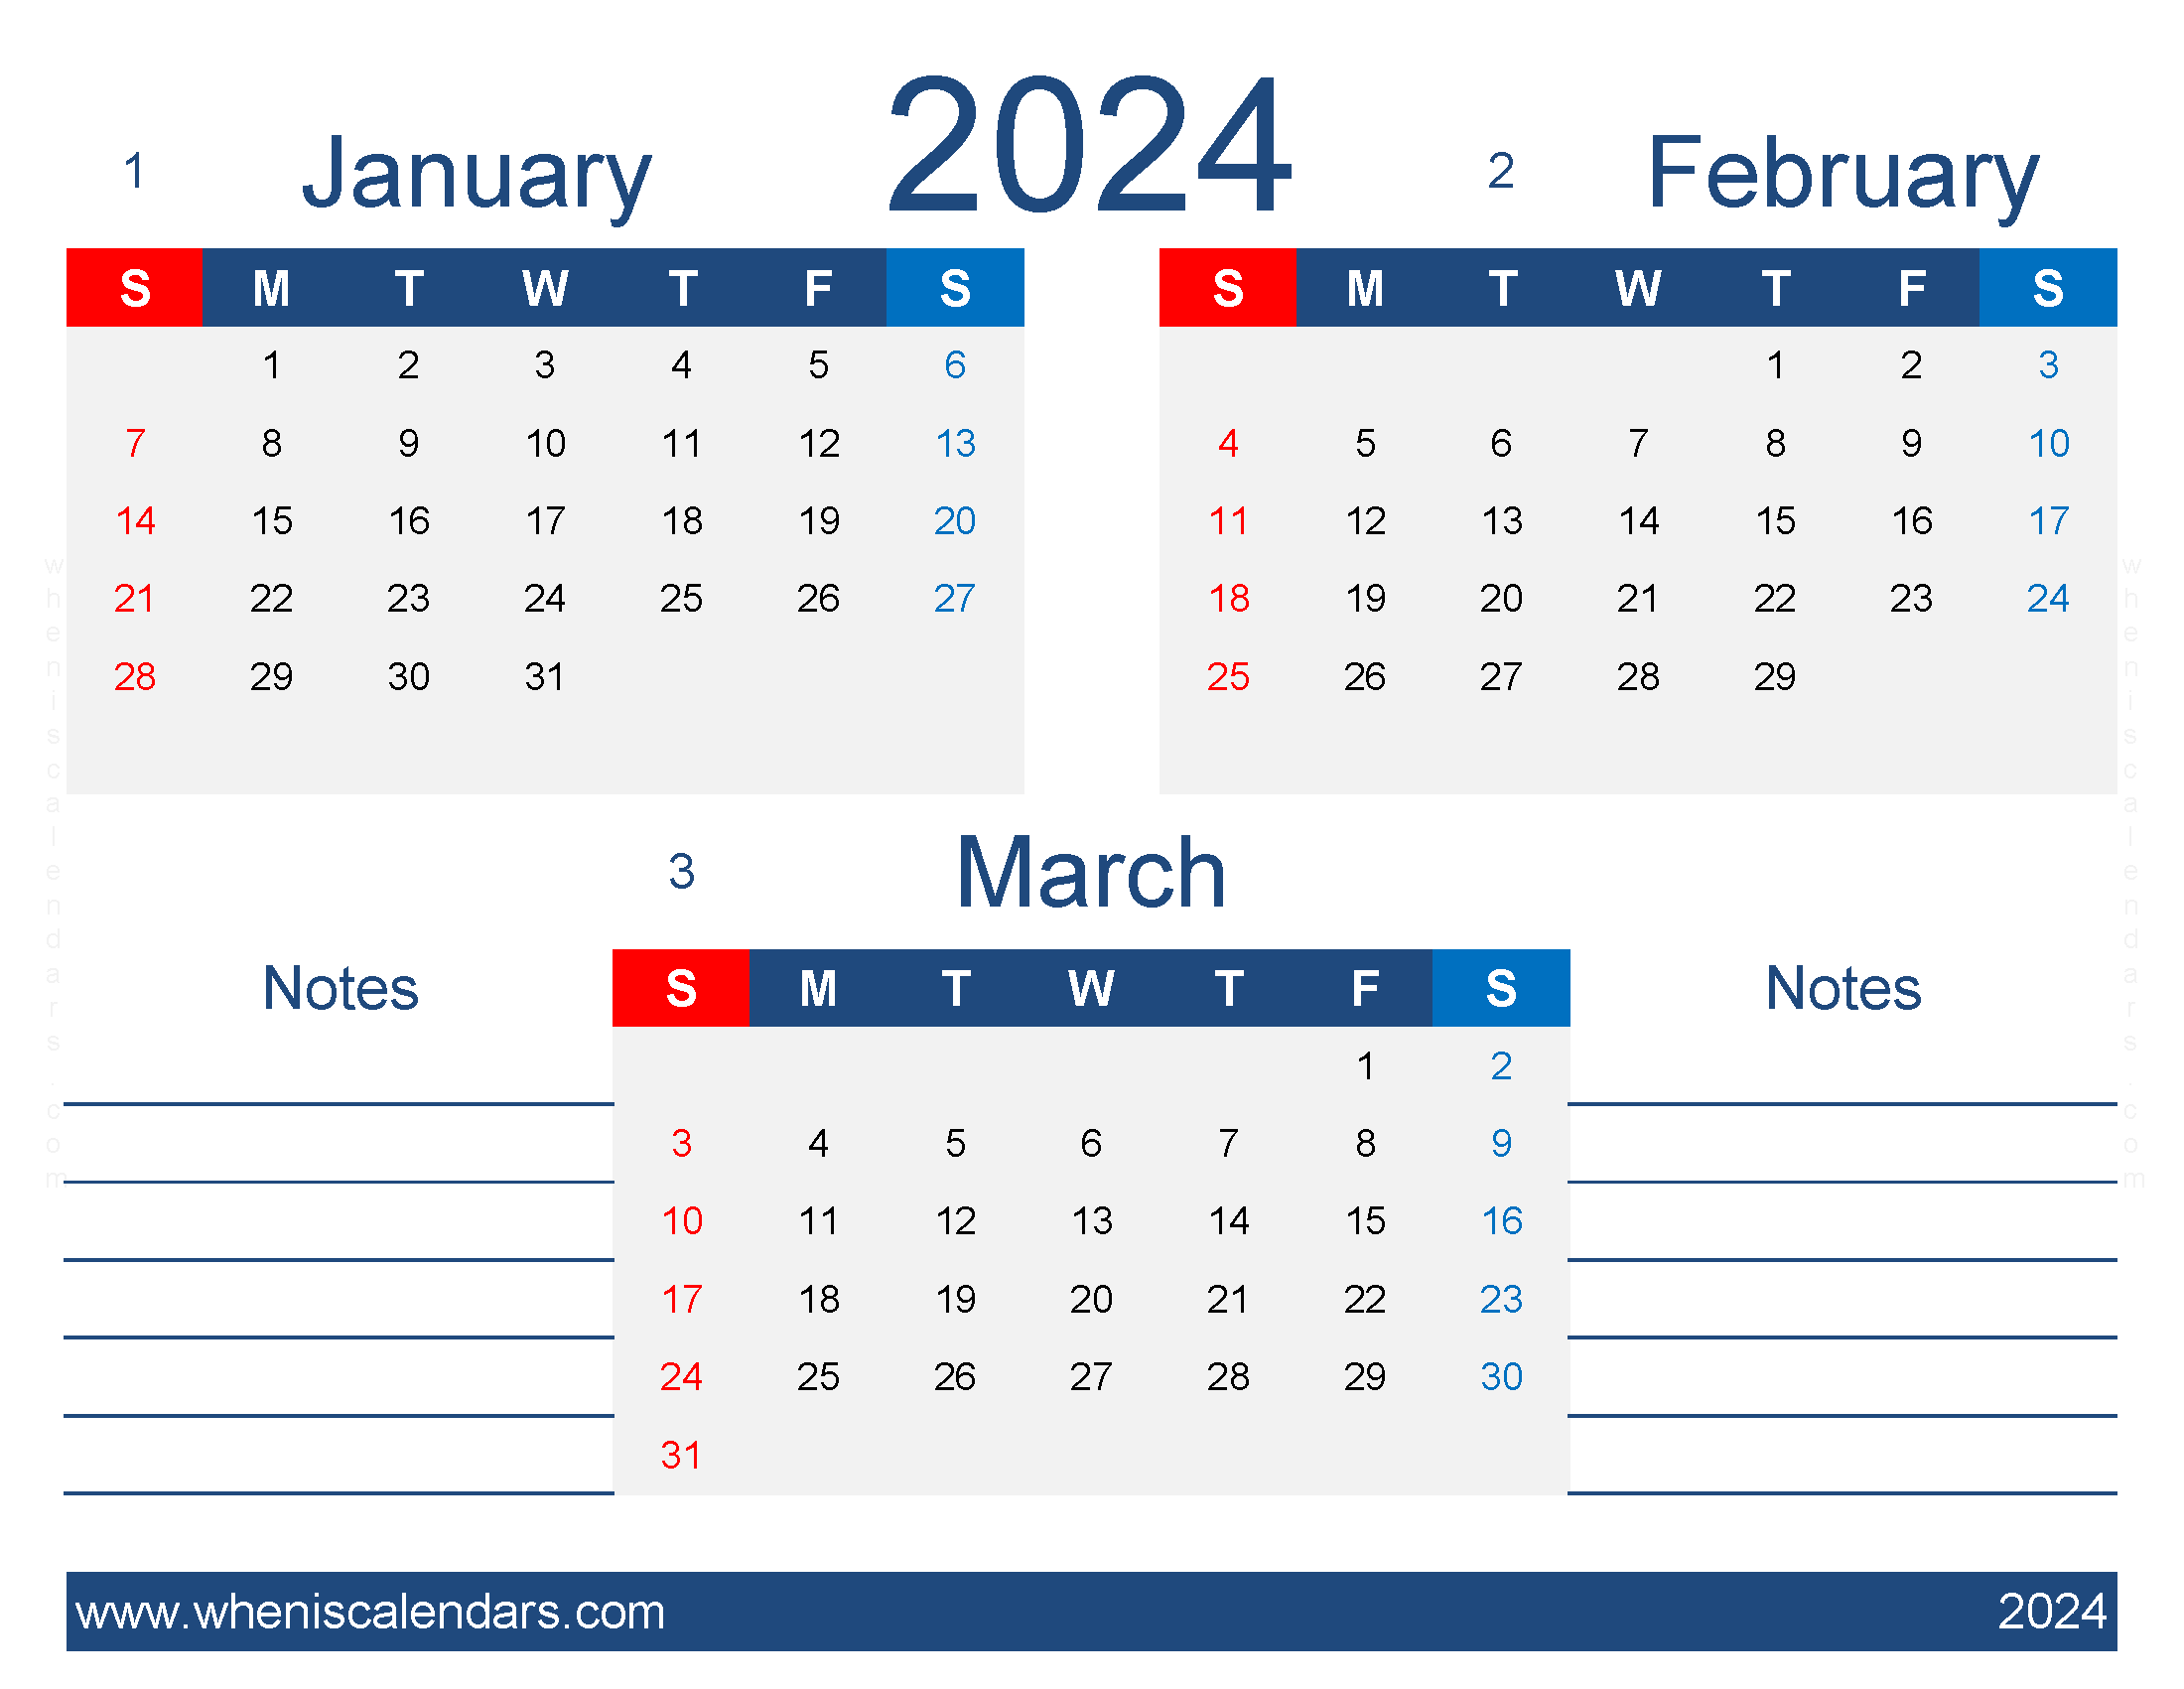 Download free January February March 2024 calendar JFM440